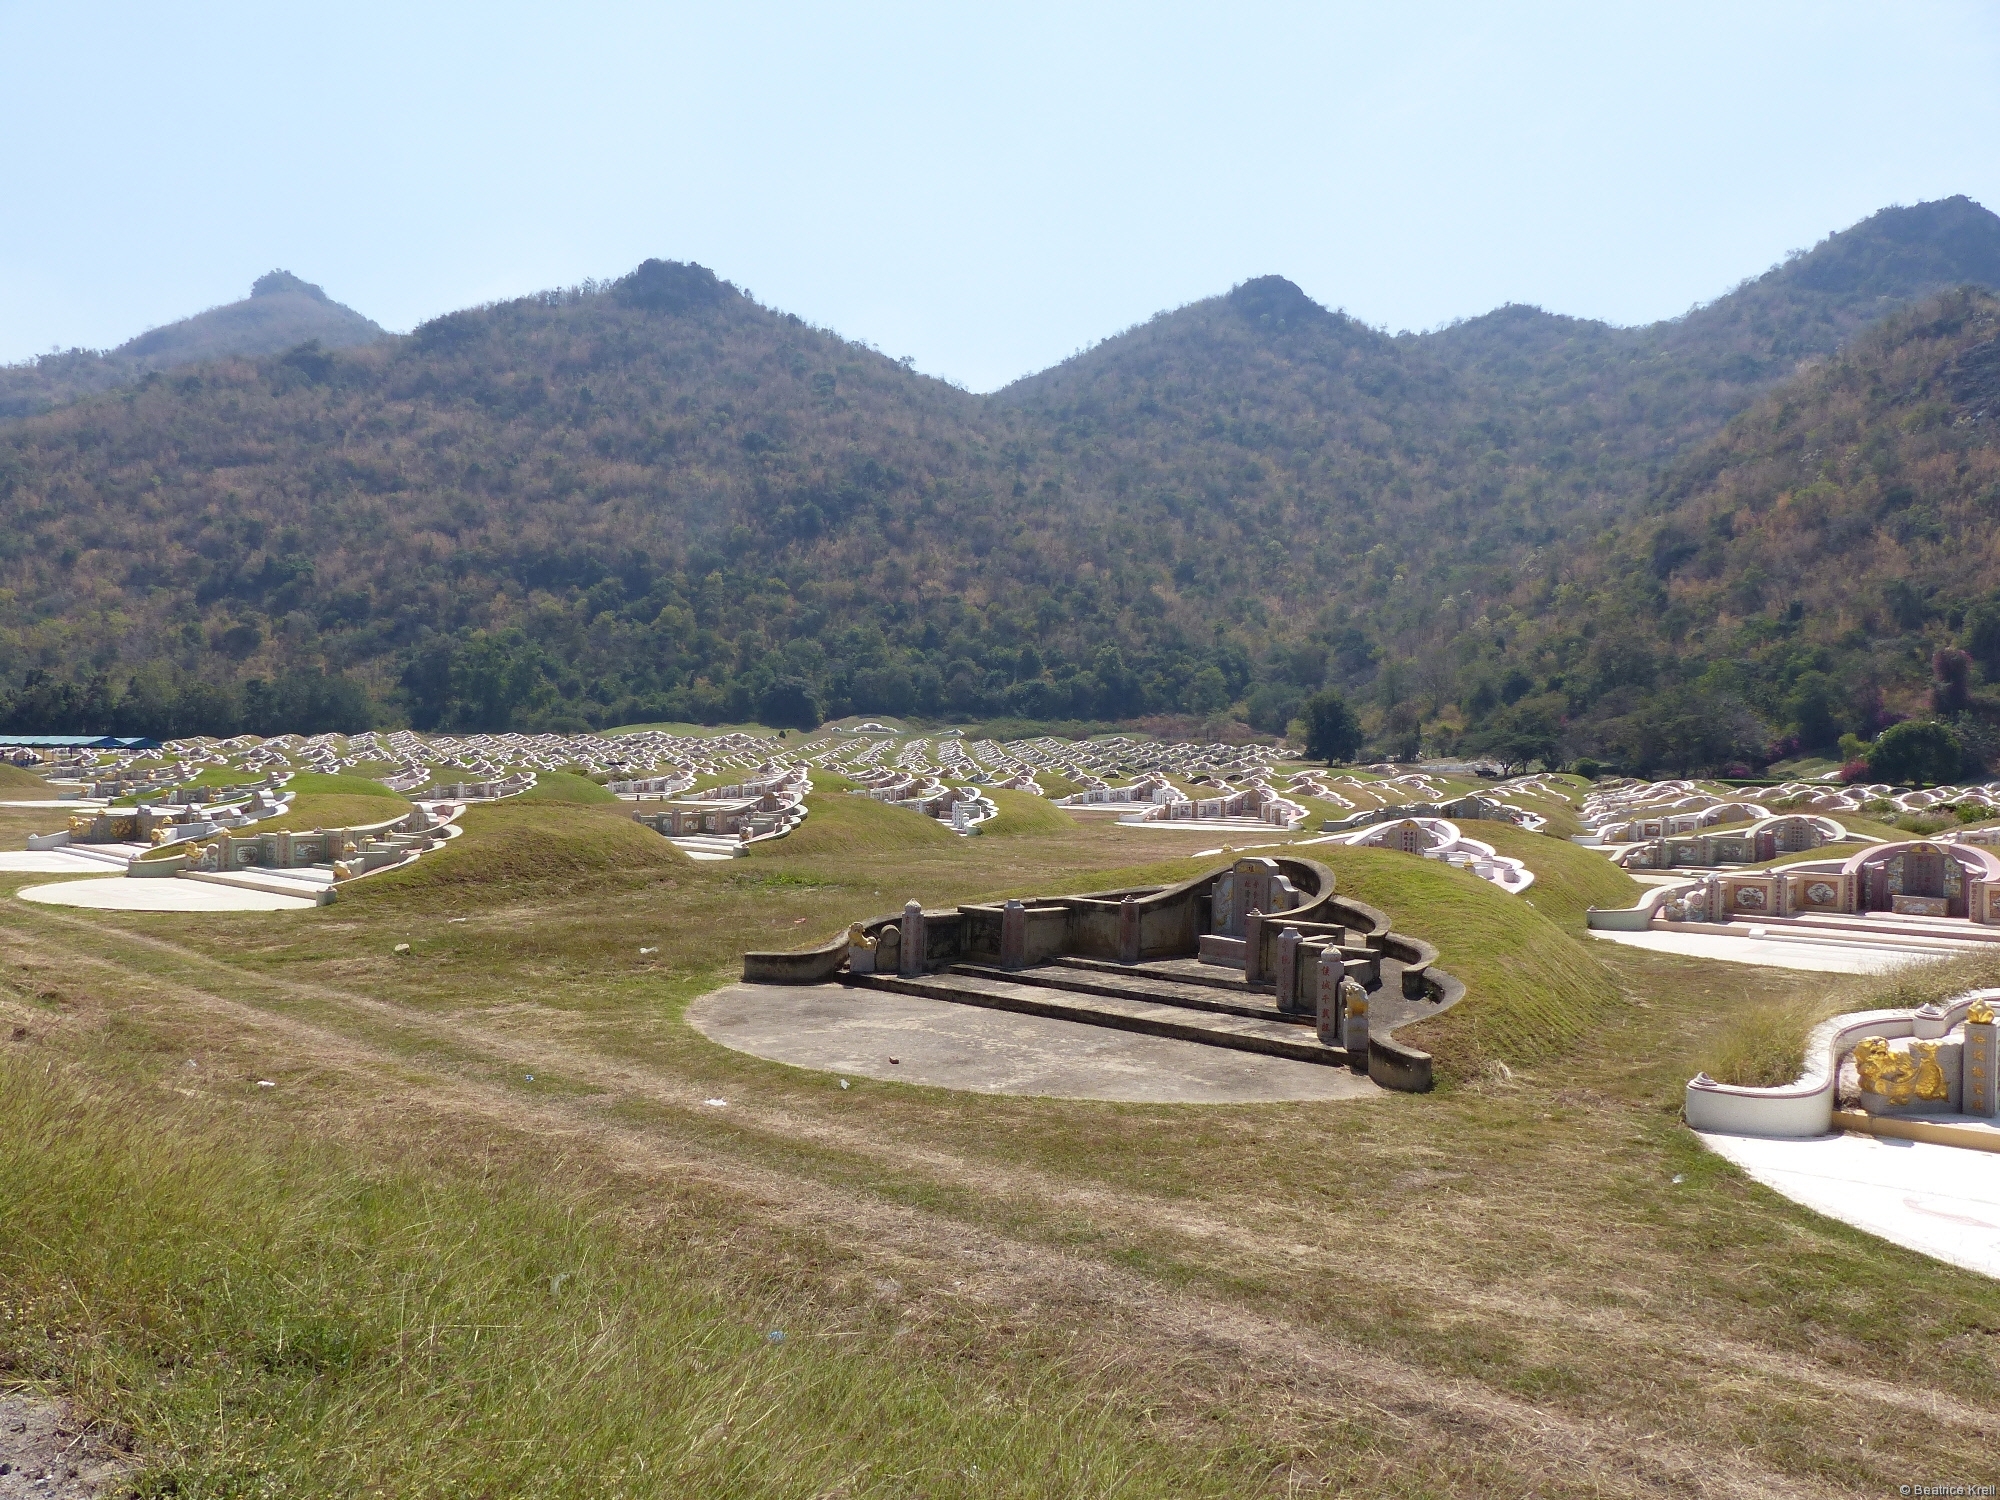 Chinesischer Friedhof